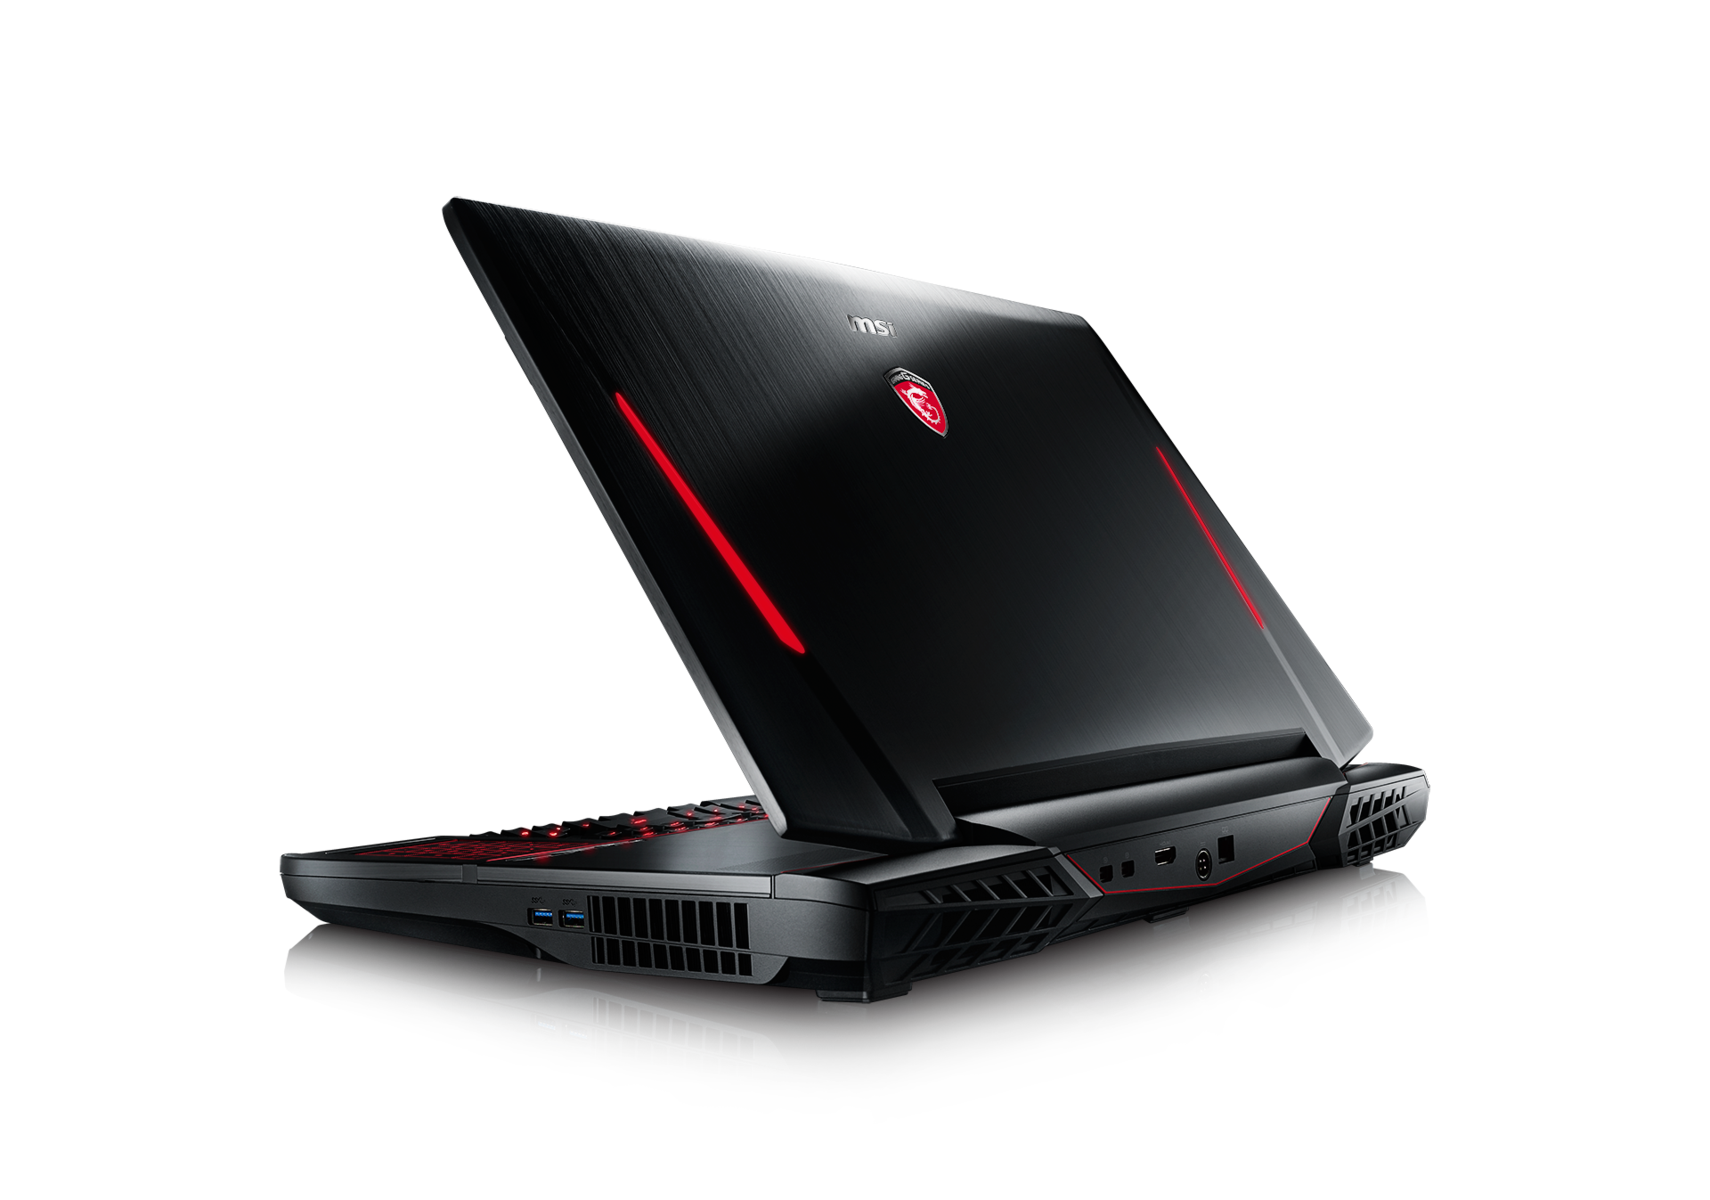 MSI presents GT80 Titan gaming laptop with GTX 980M SLI - NotebookCheck.net News